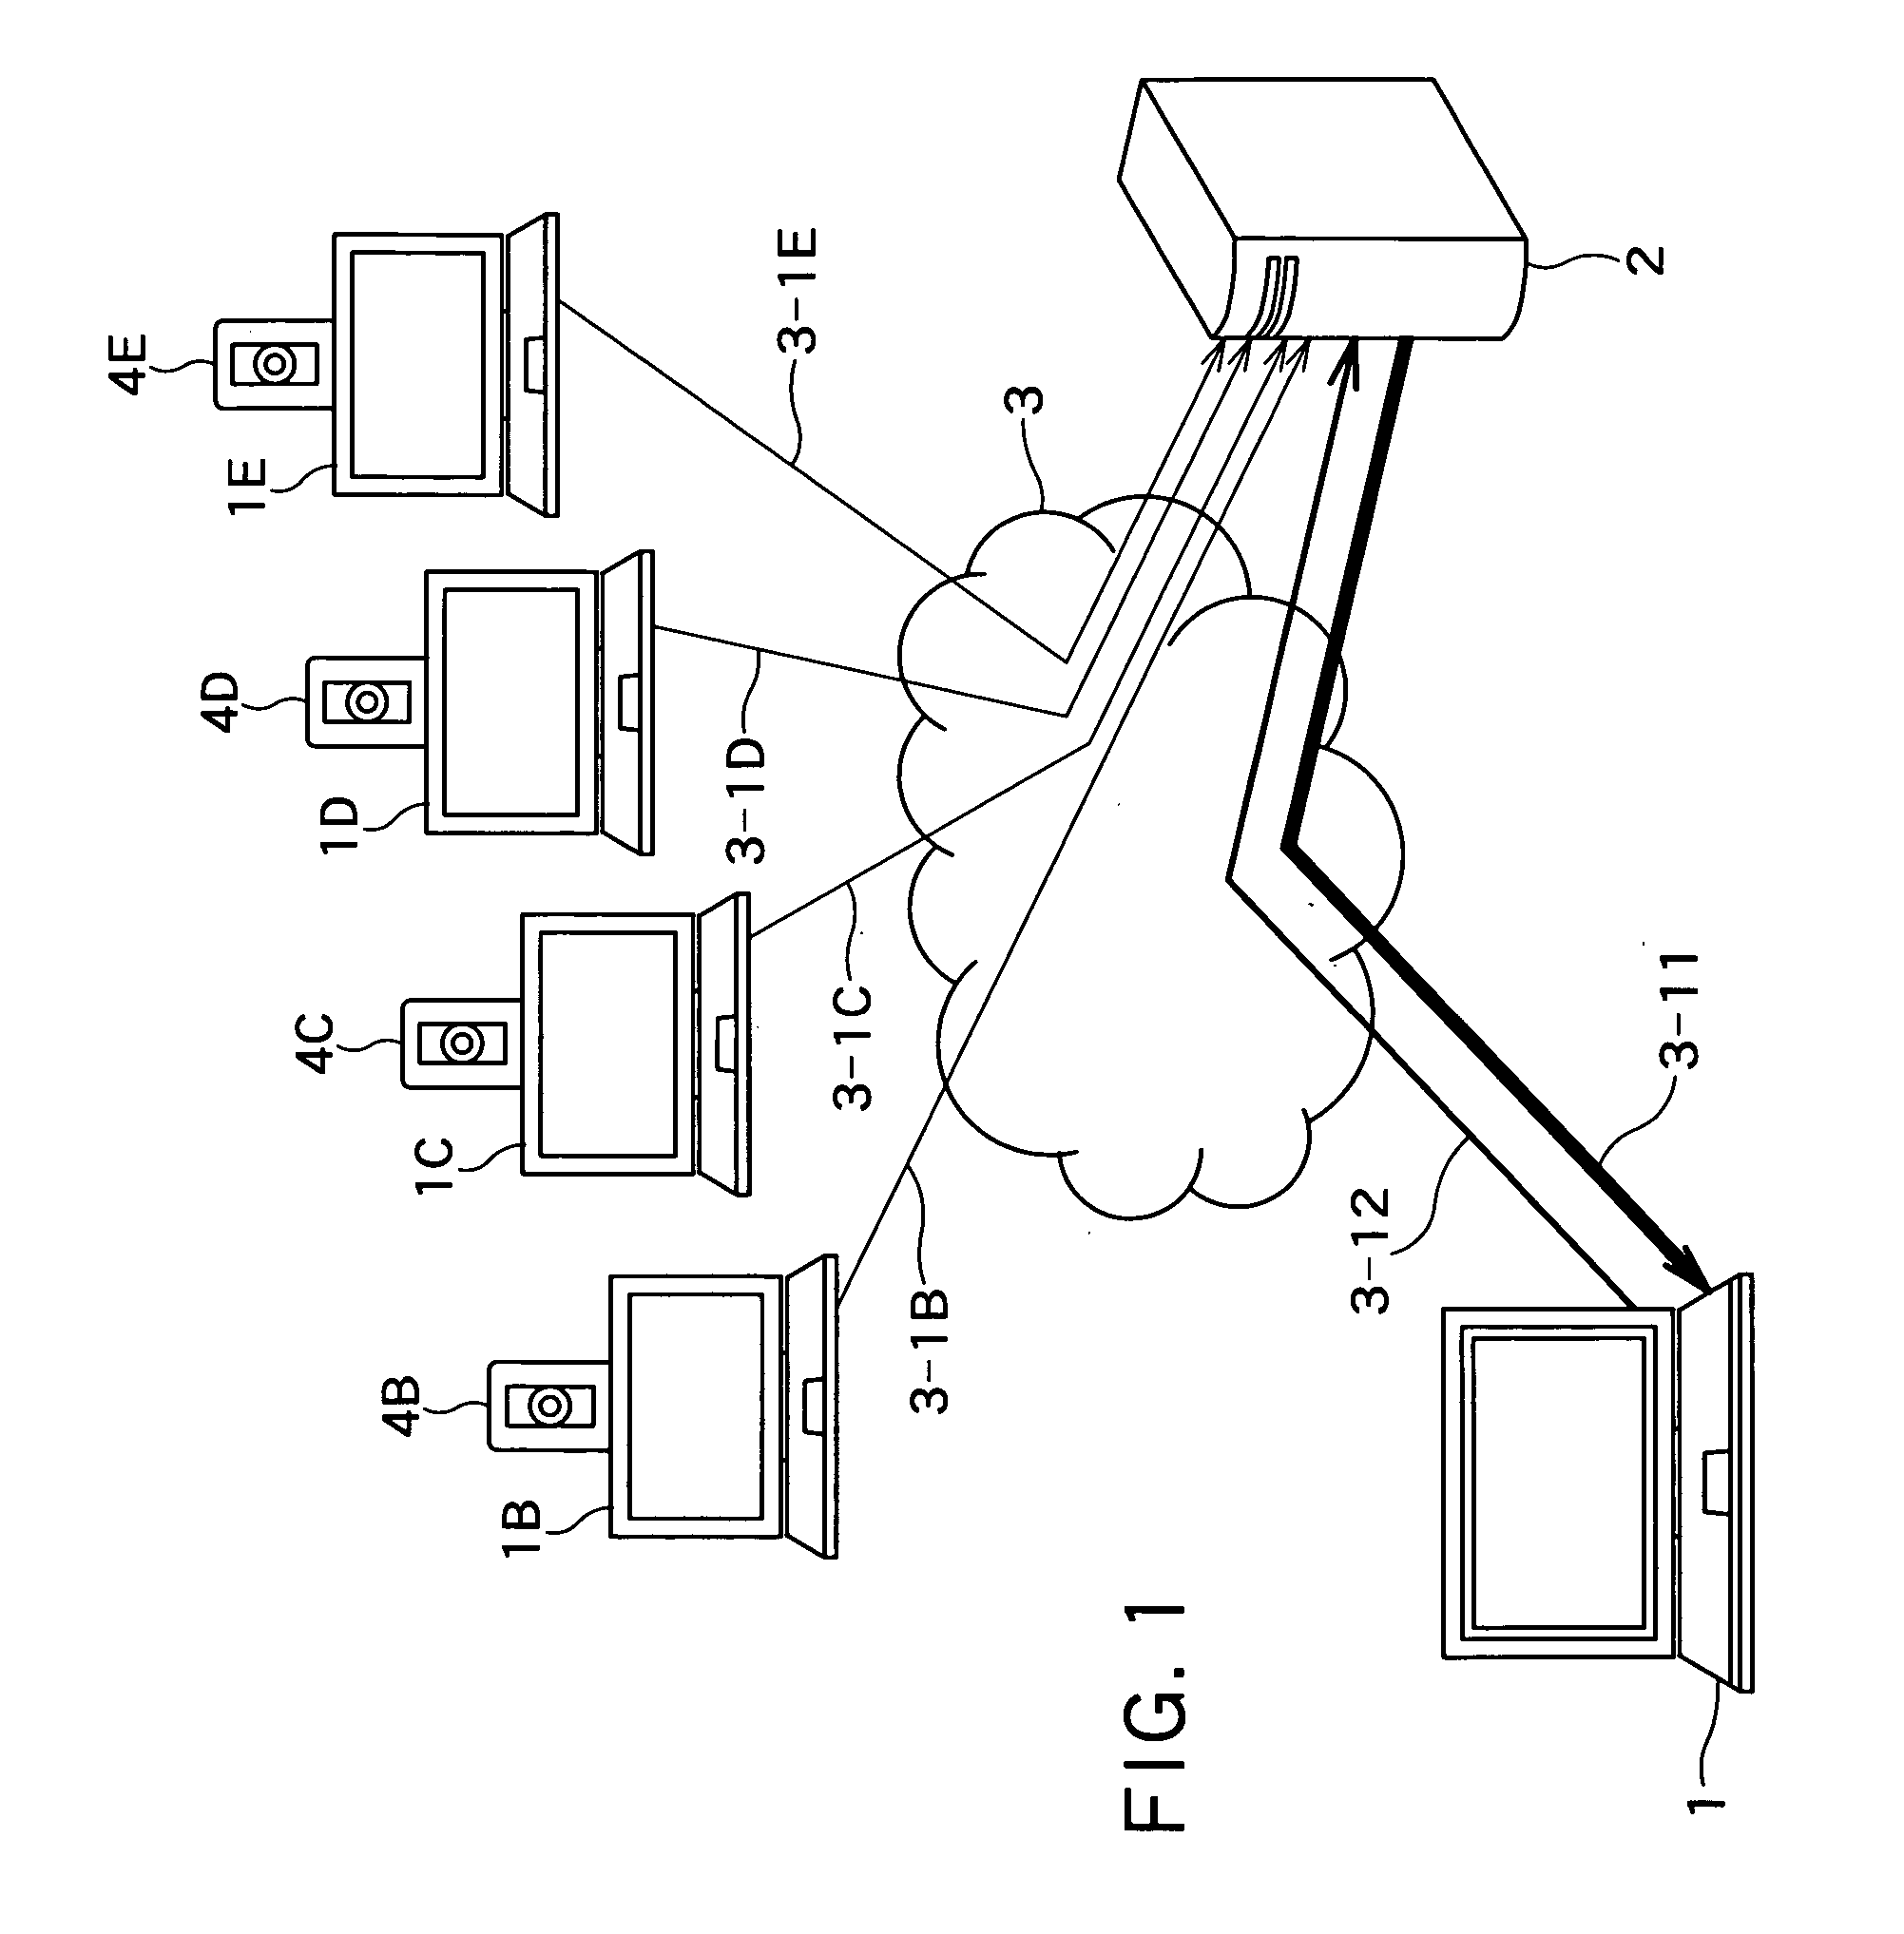 Display apparatus, method, and program